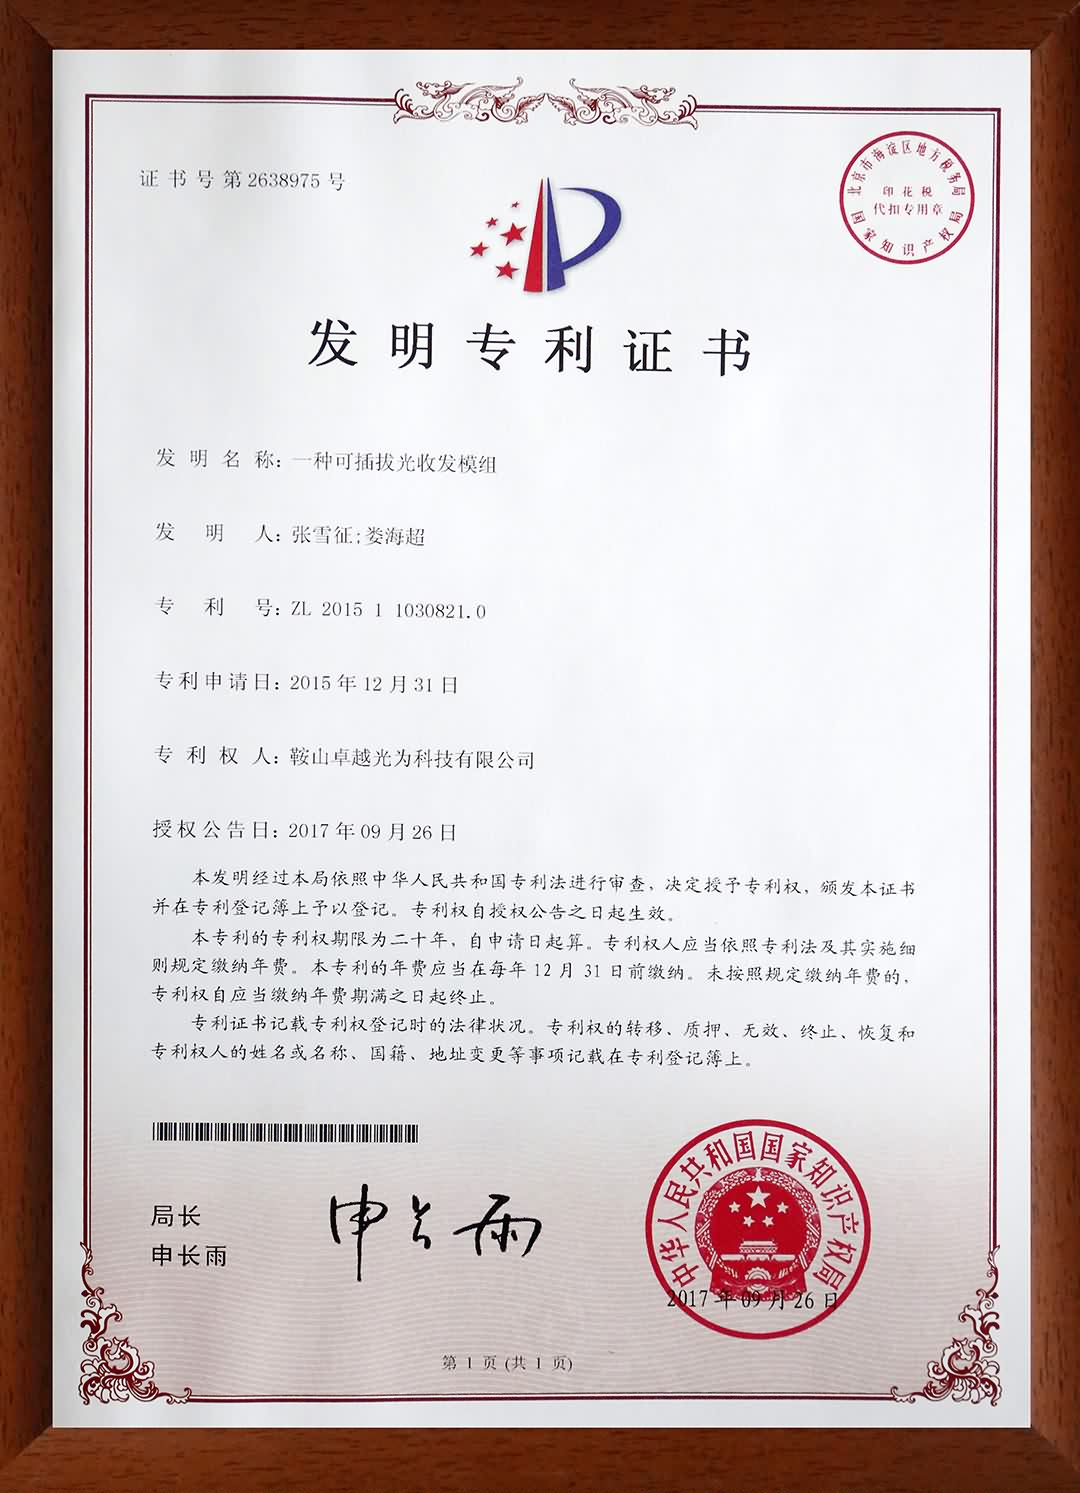 Paten certificate 2